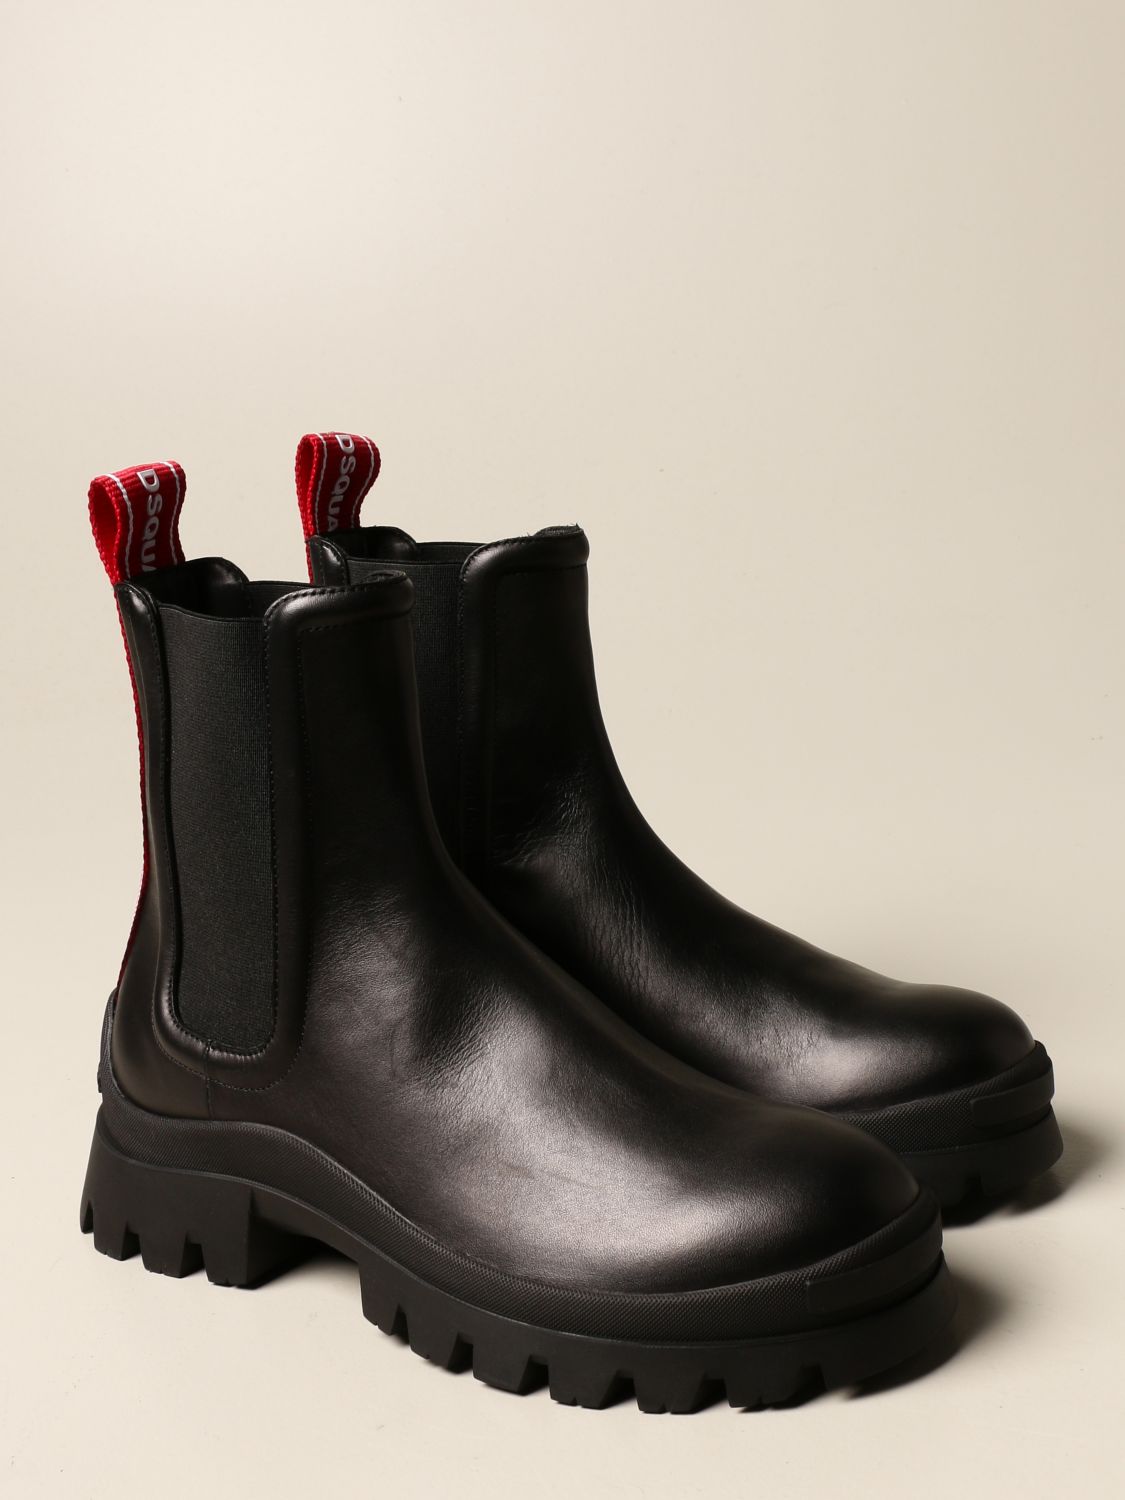 DSQUARED2: ブーツ メンズ - ブラック | ブーツ Dsquared2 ABM0060 0150 GIGLIO.COM